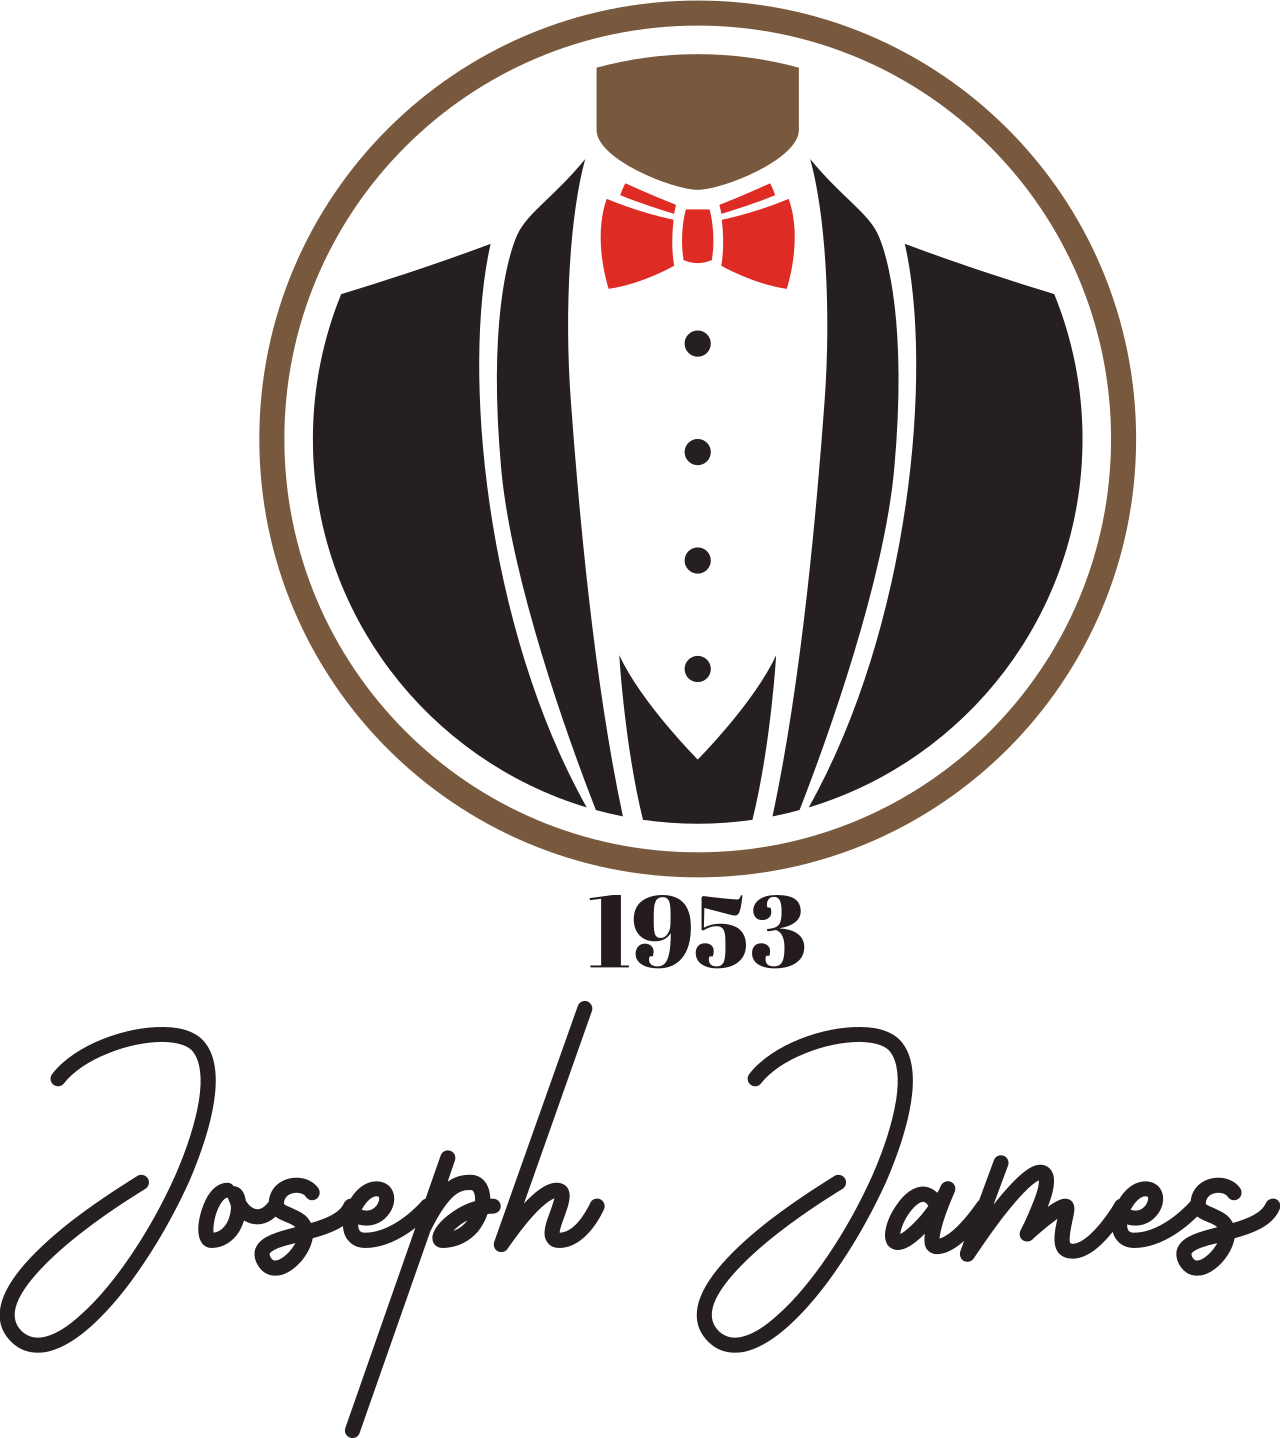 Joseph James 's web page